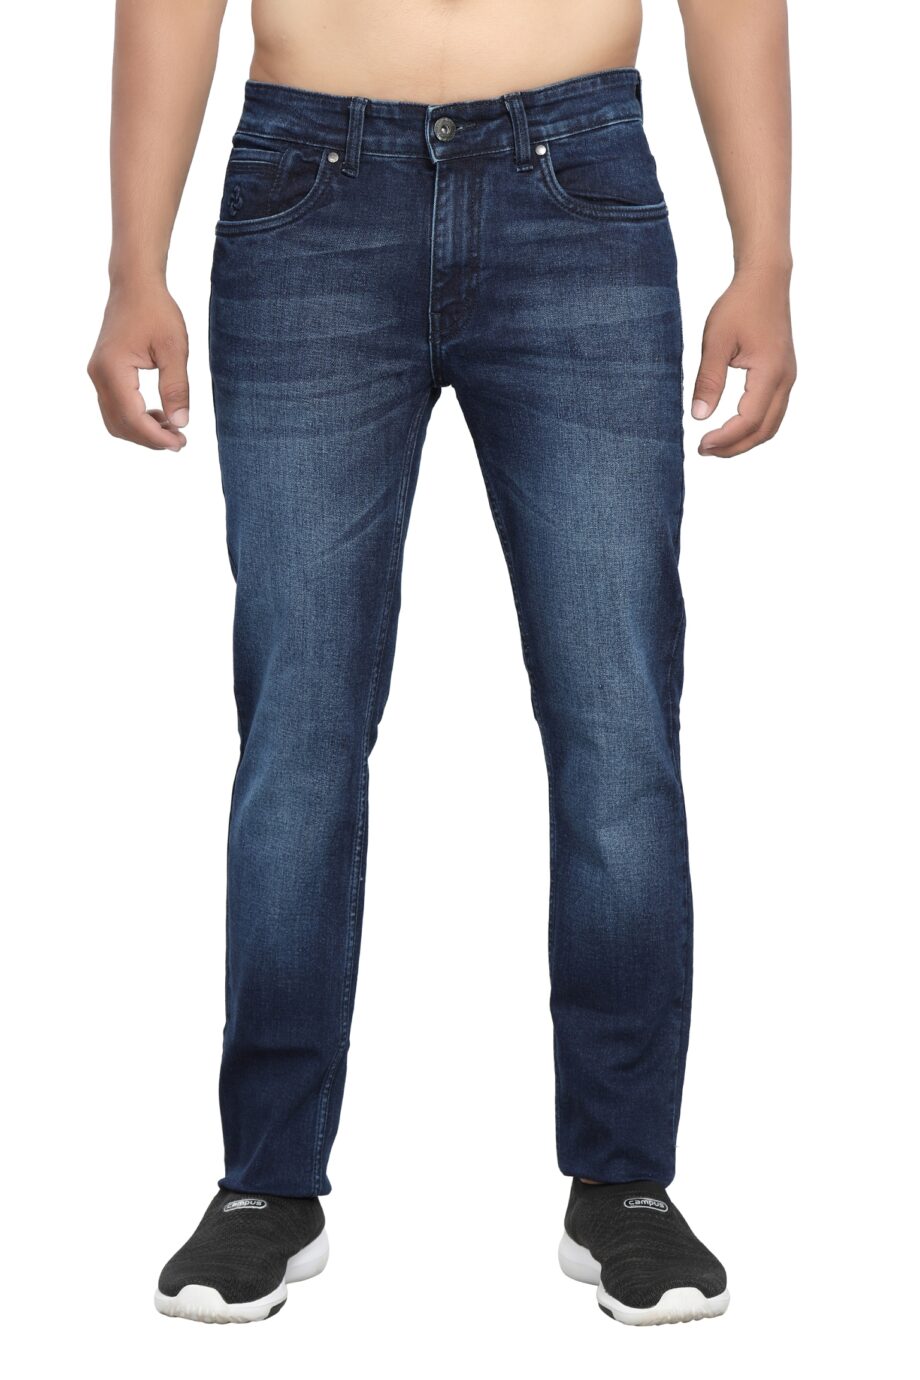 Stretchable dark blue denim jeans pant for men